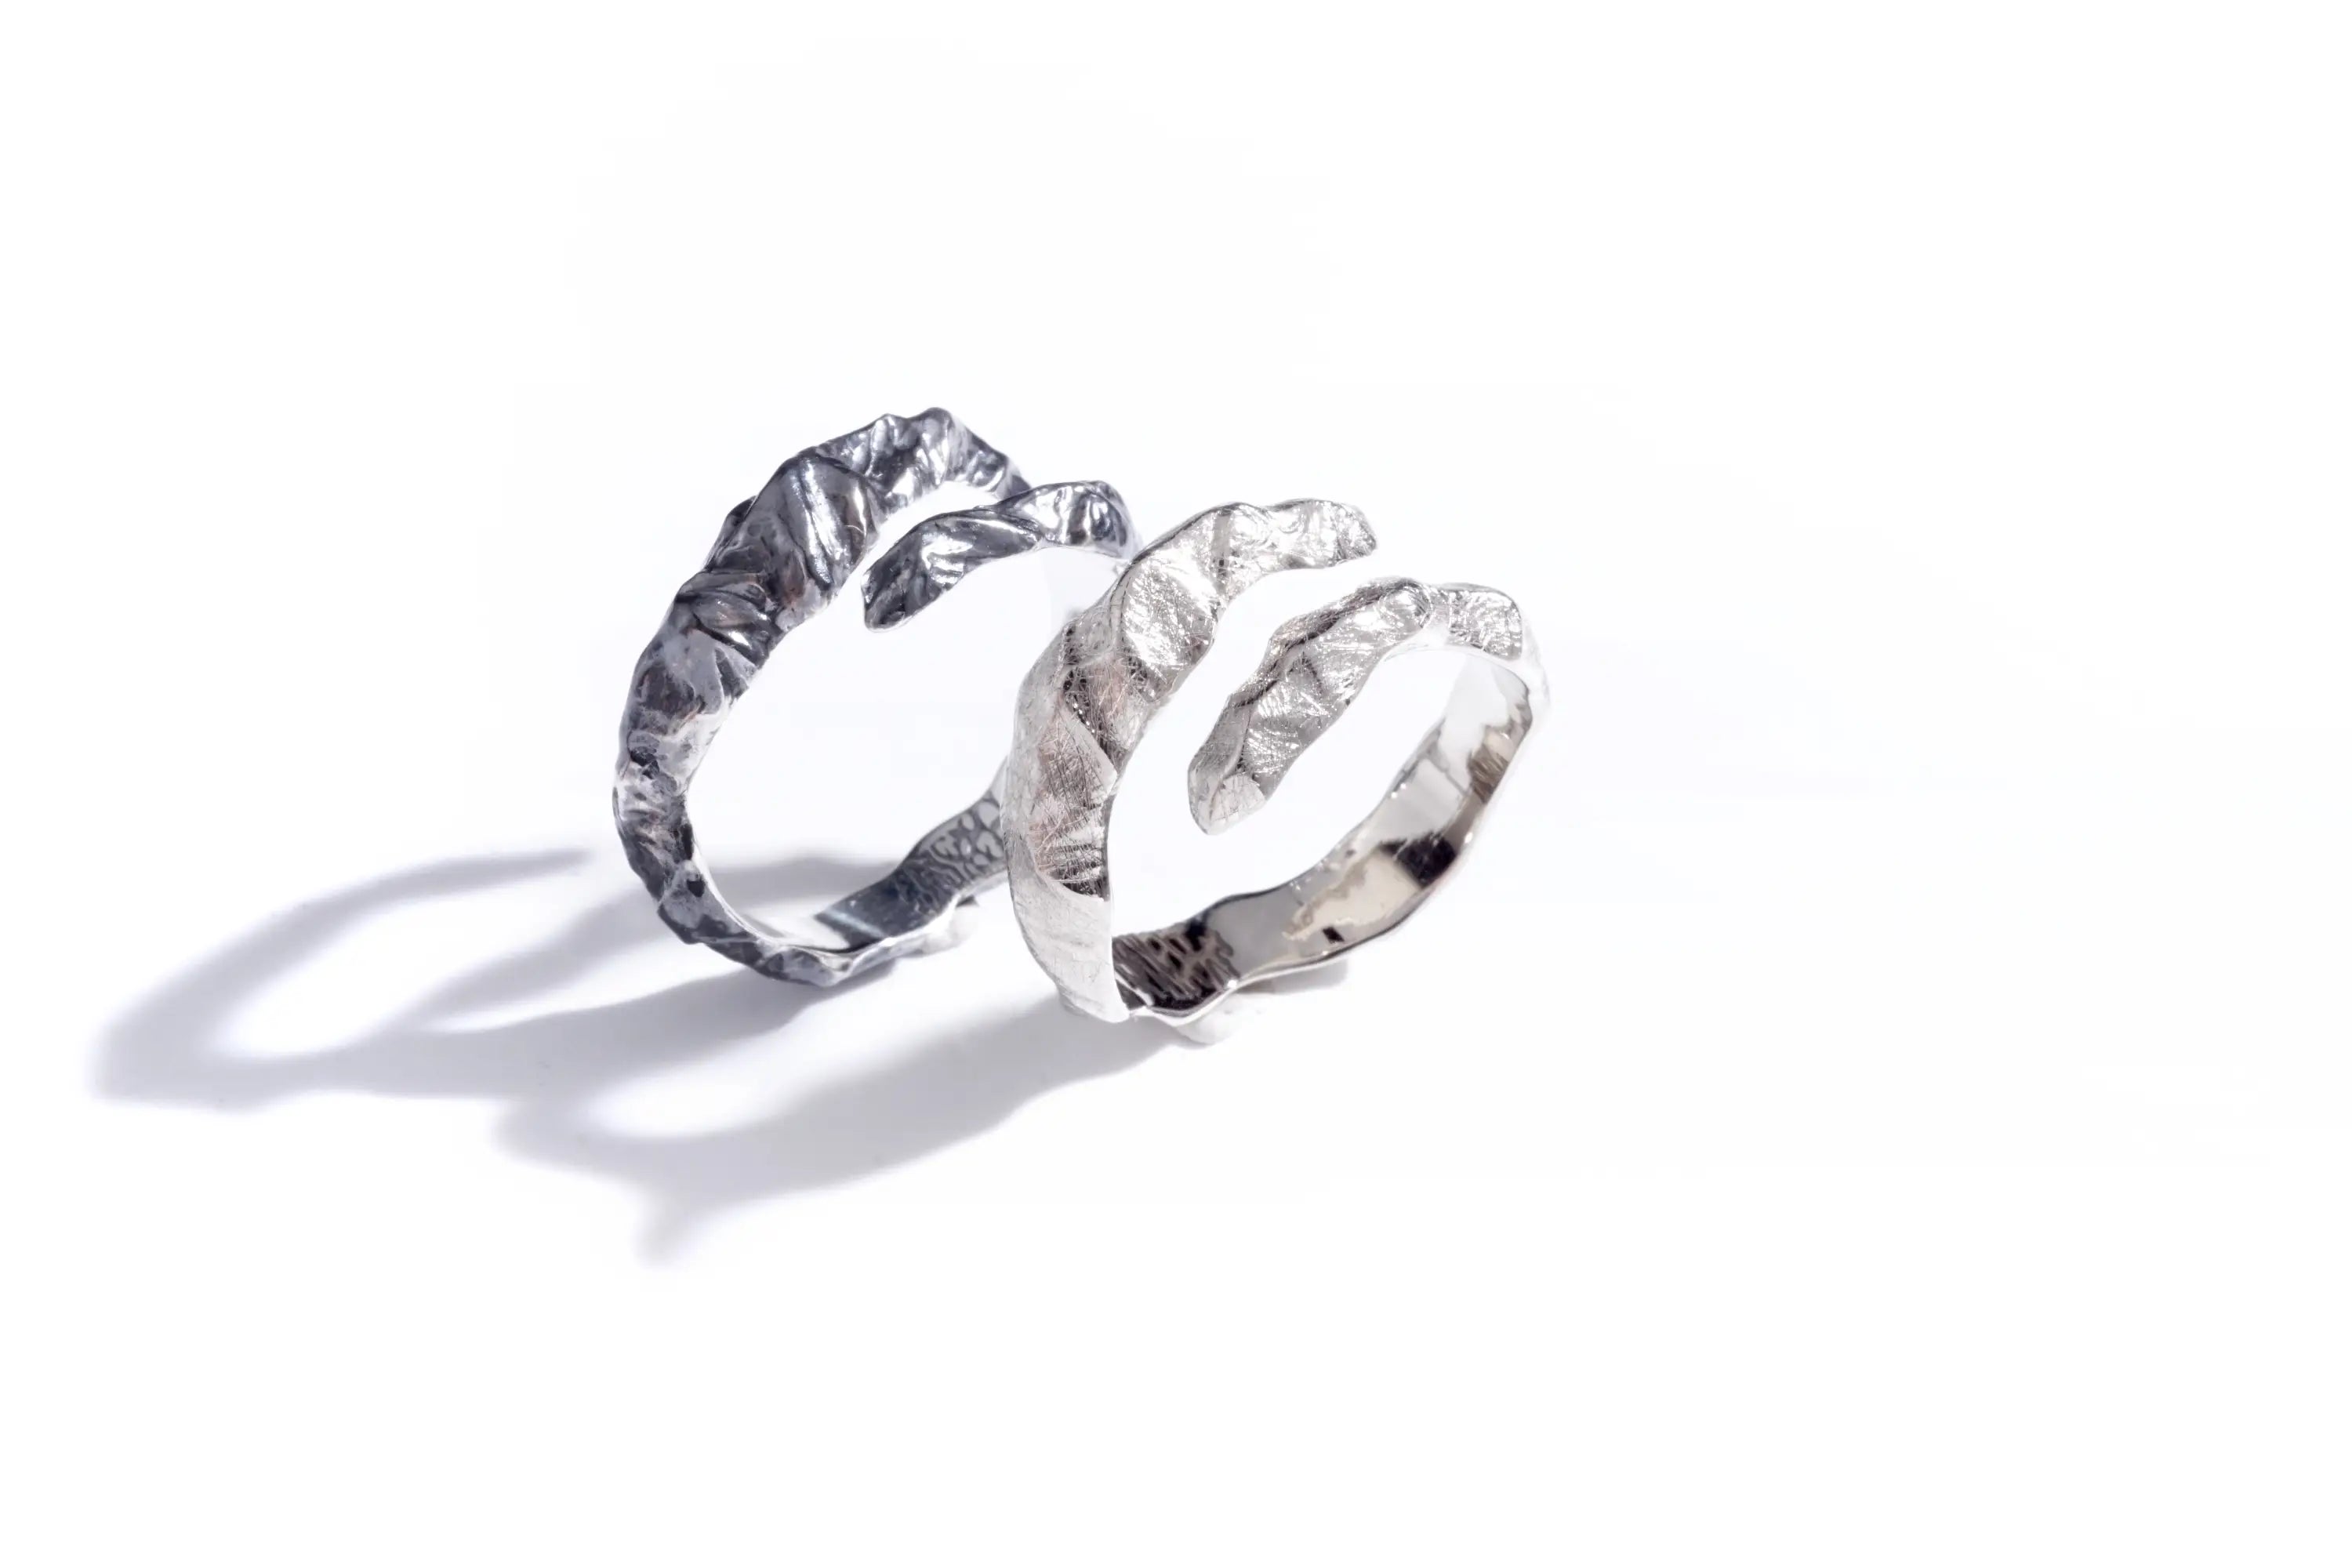 Chia Jewelry訂做婚戒客製化對戒服務，獨特設計，以山為設計主題的925銀手工訂製對戒。